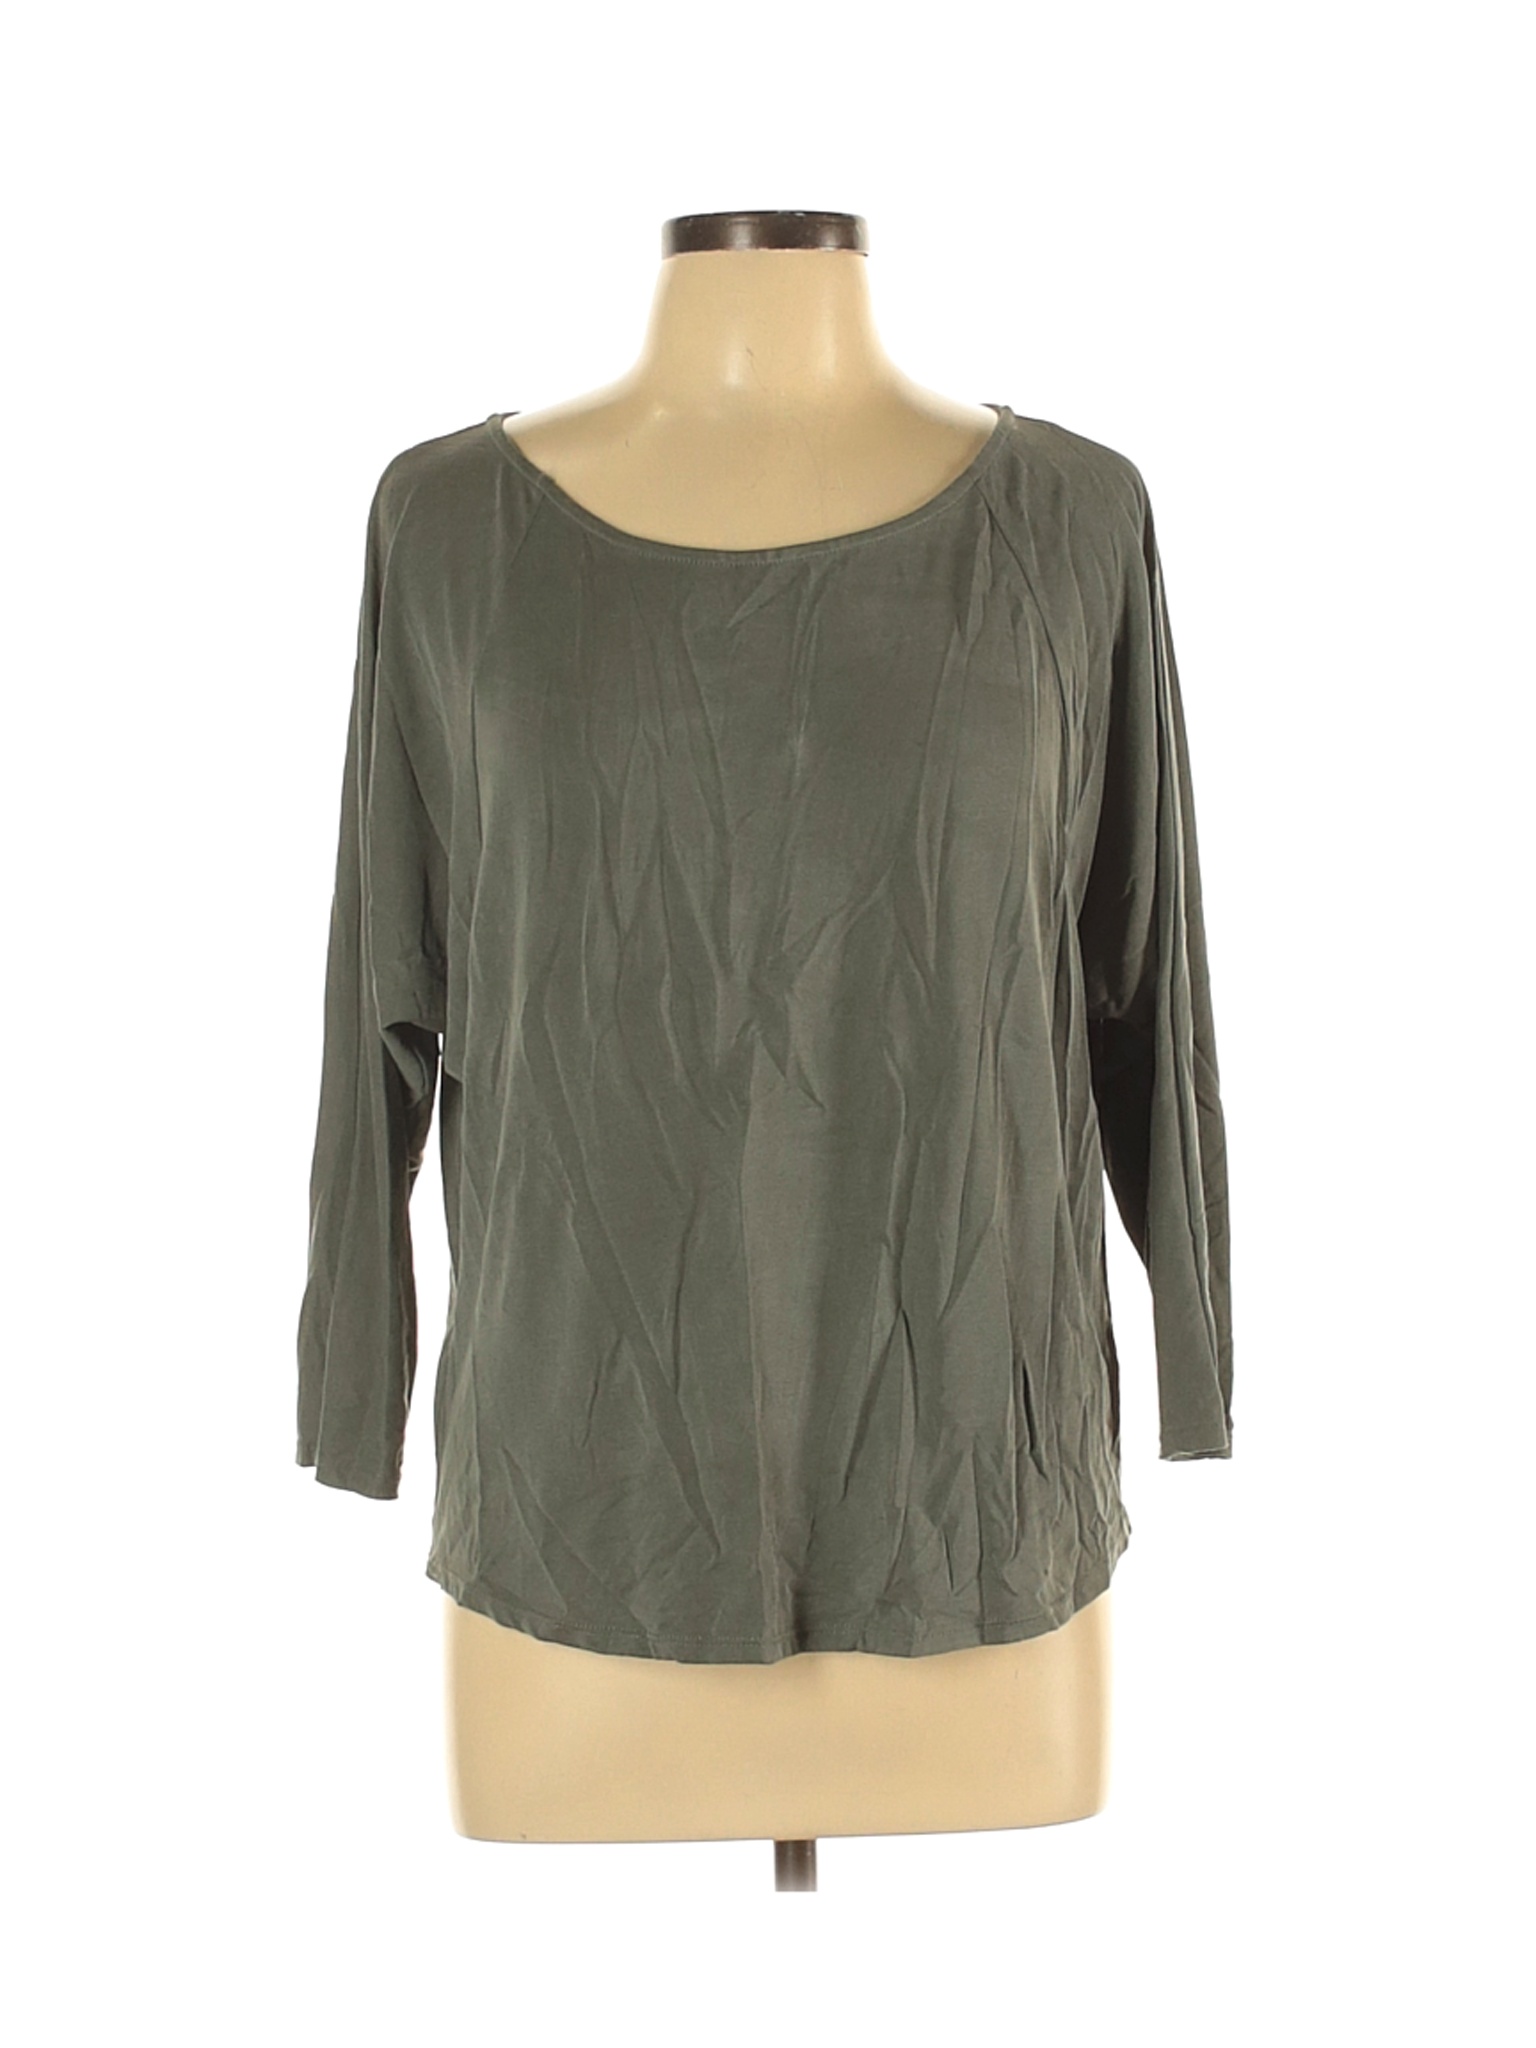 Cable & Gauge Women Green Long Sleeve Top L | eBay